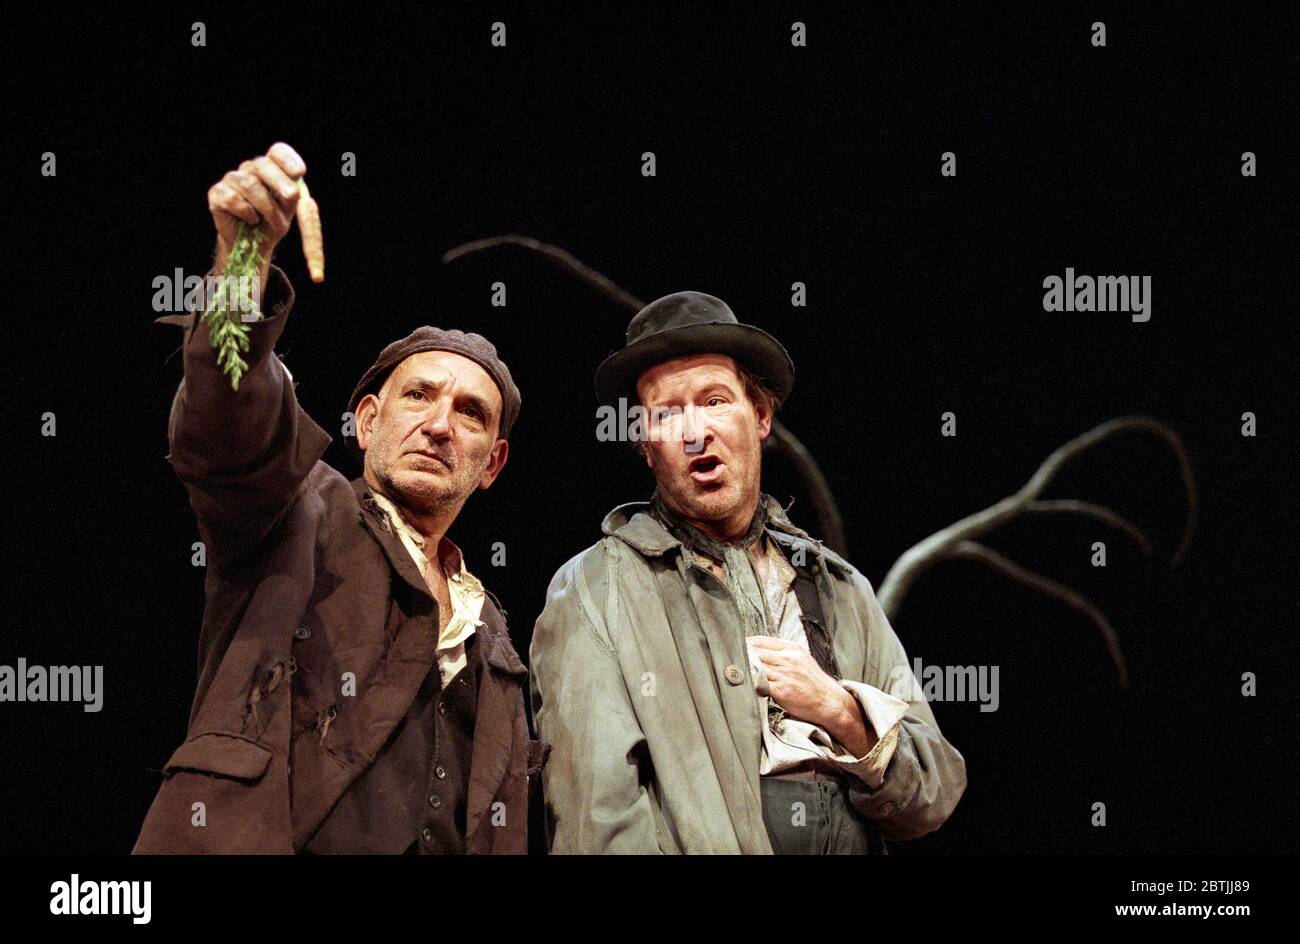 l-r: Ben Kingsley (Estragon), Alan Howard (Vladimir) in WAITING FOR GODOT by Samuel Beckett at the Old Vic Theatre, London SE1  27/06/1997 design: John Gunter director: Peter Hall Stock Photo